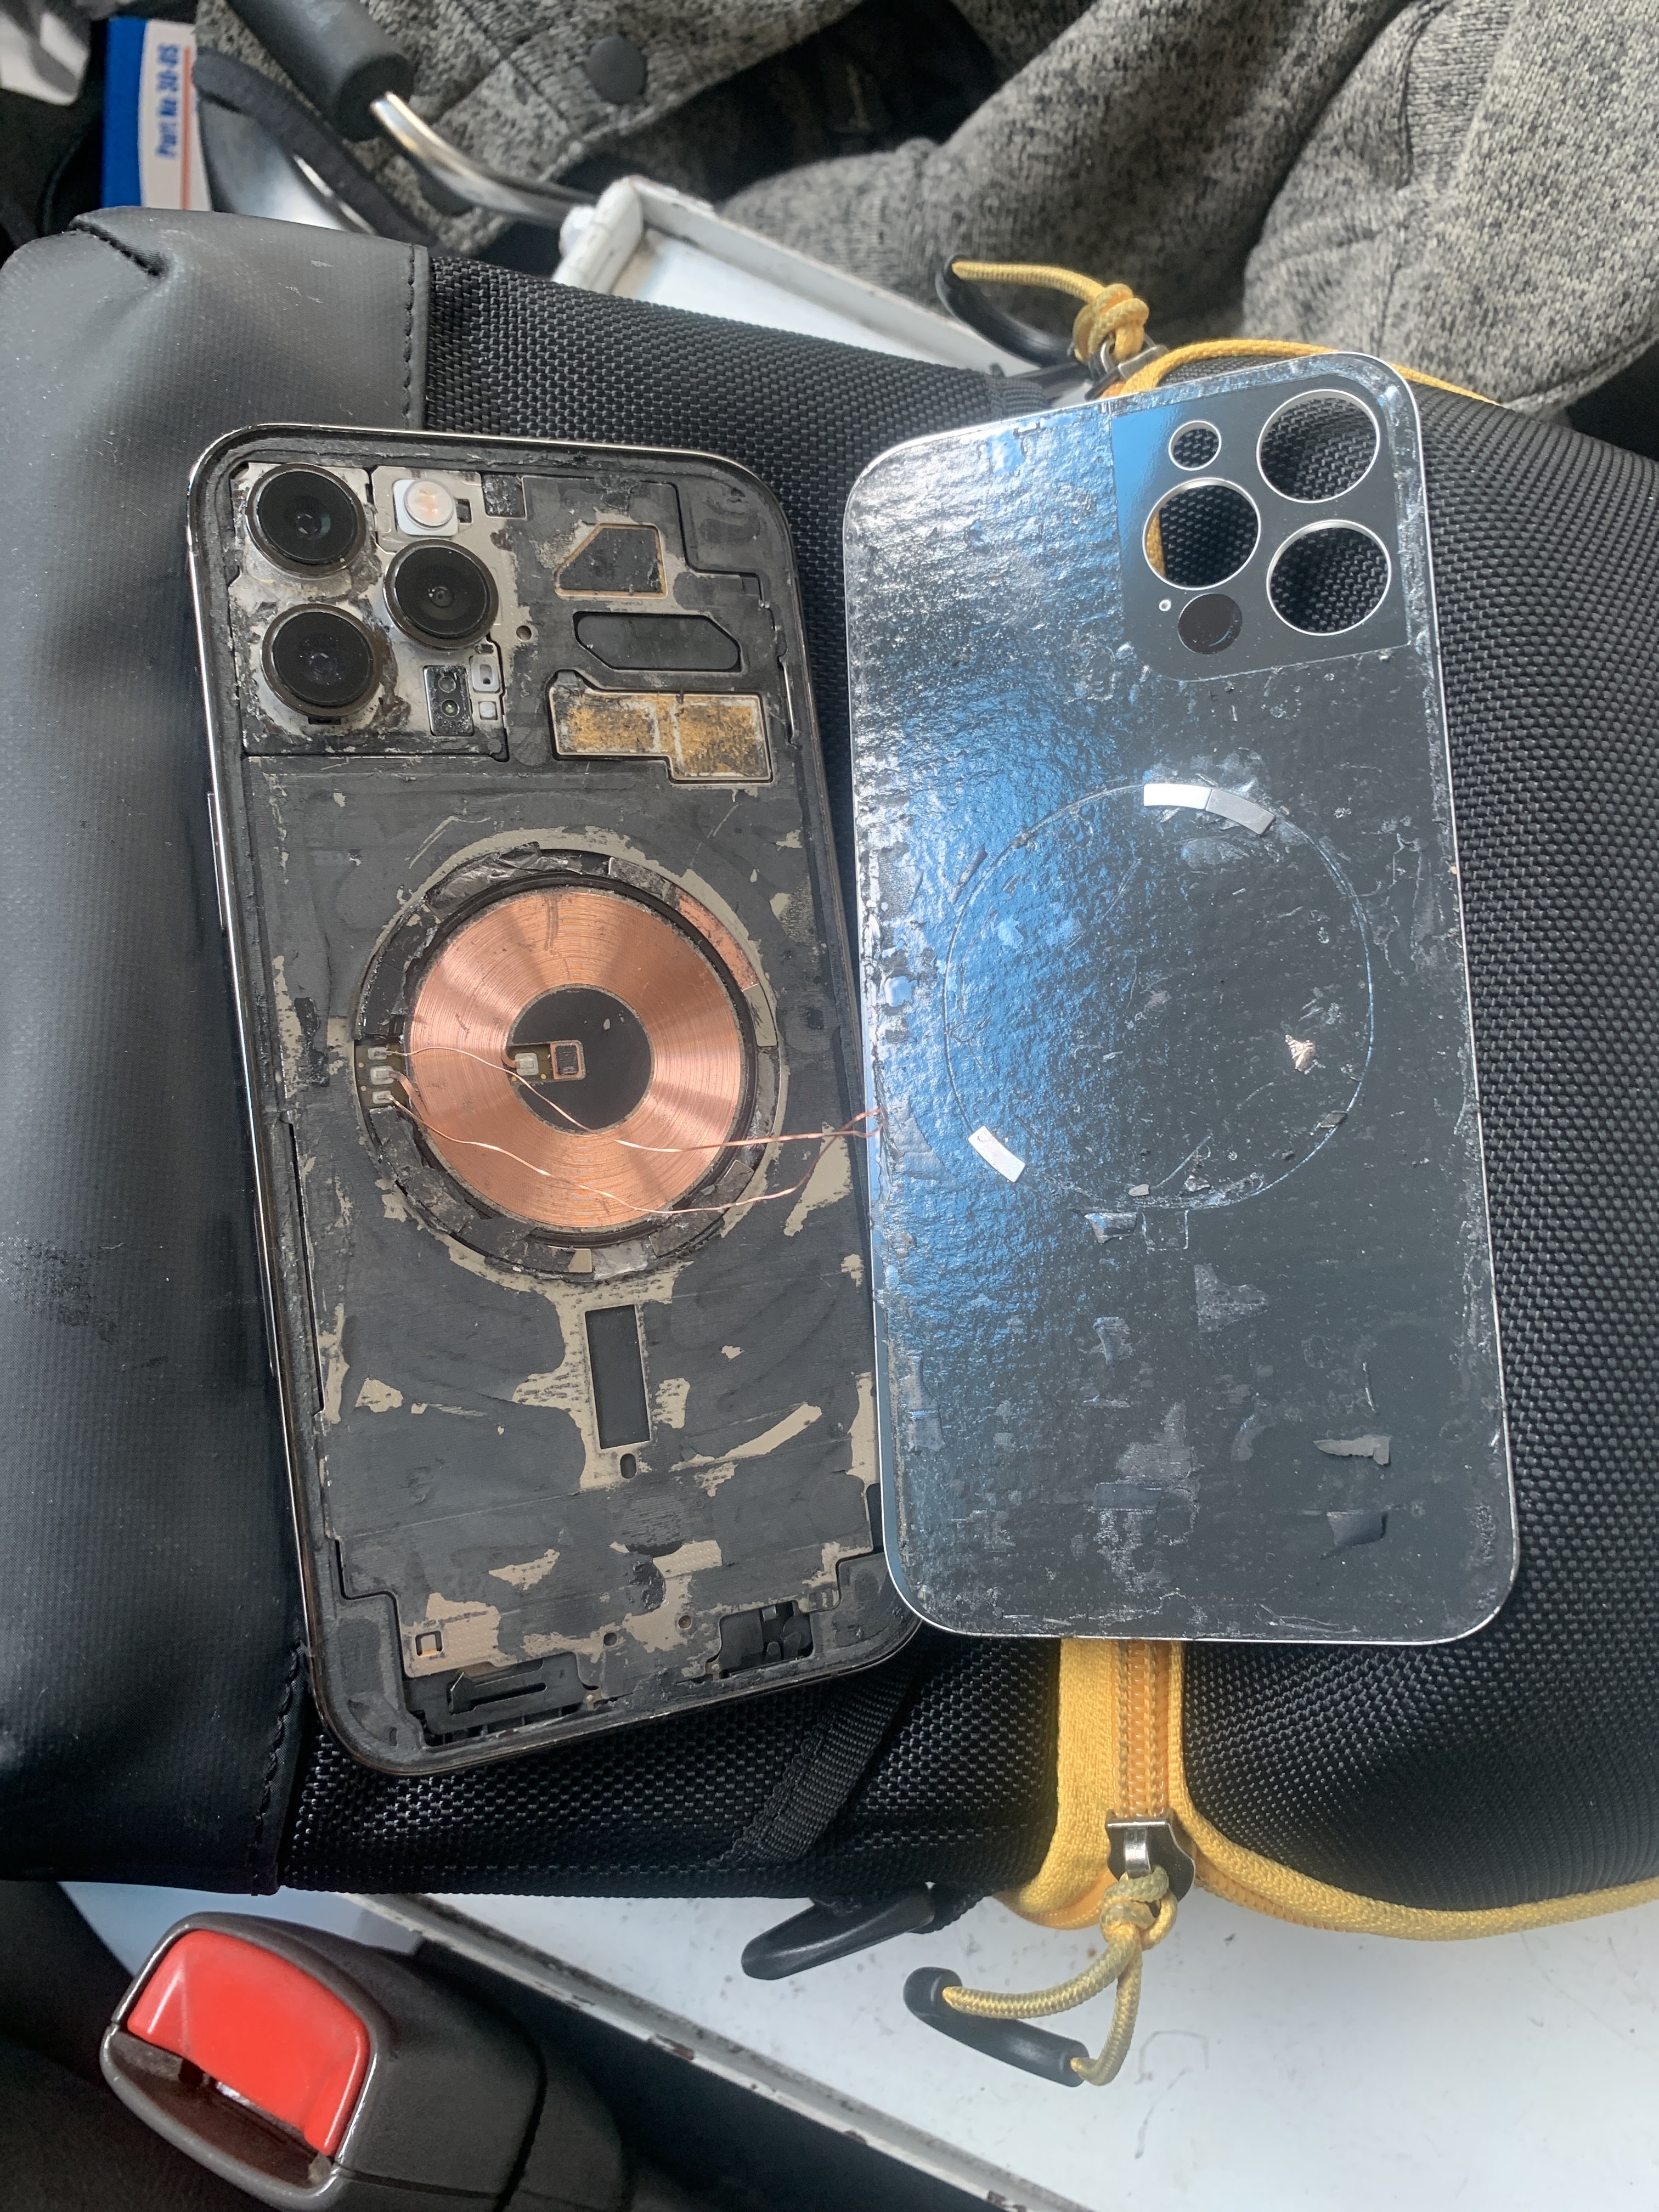 Asurion Phone & Tech Repair - Berwyn (IL 60402), US, cracked my phone